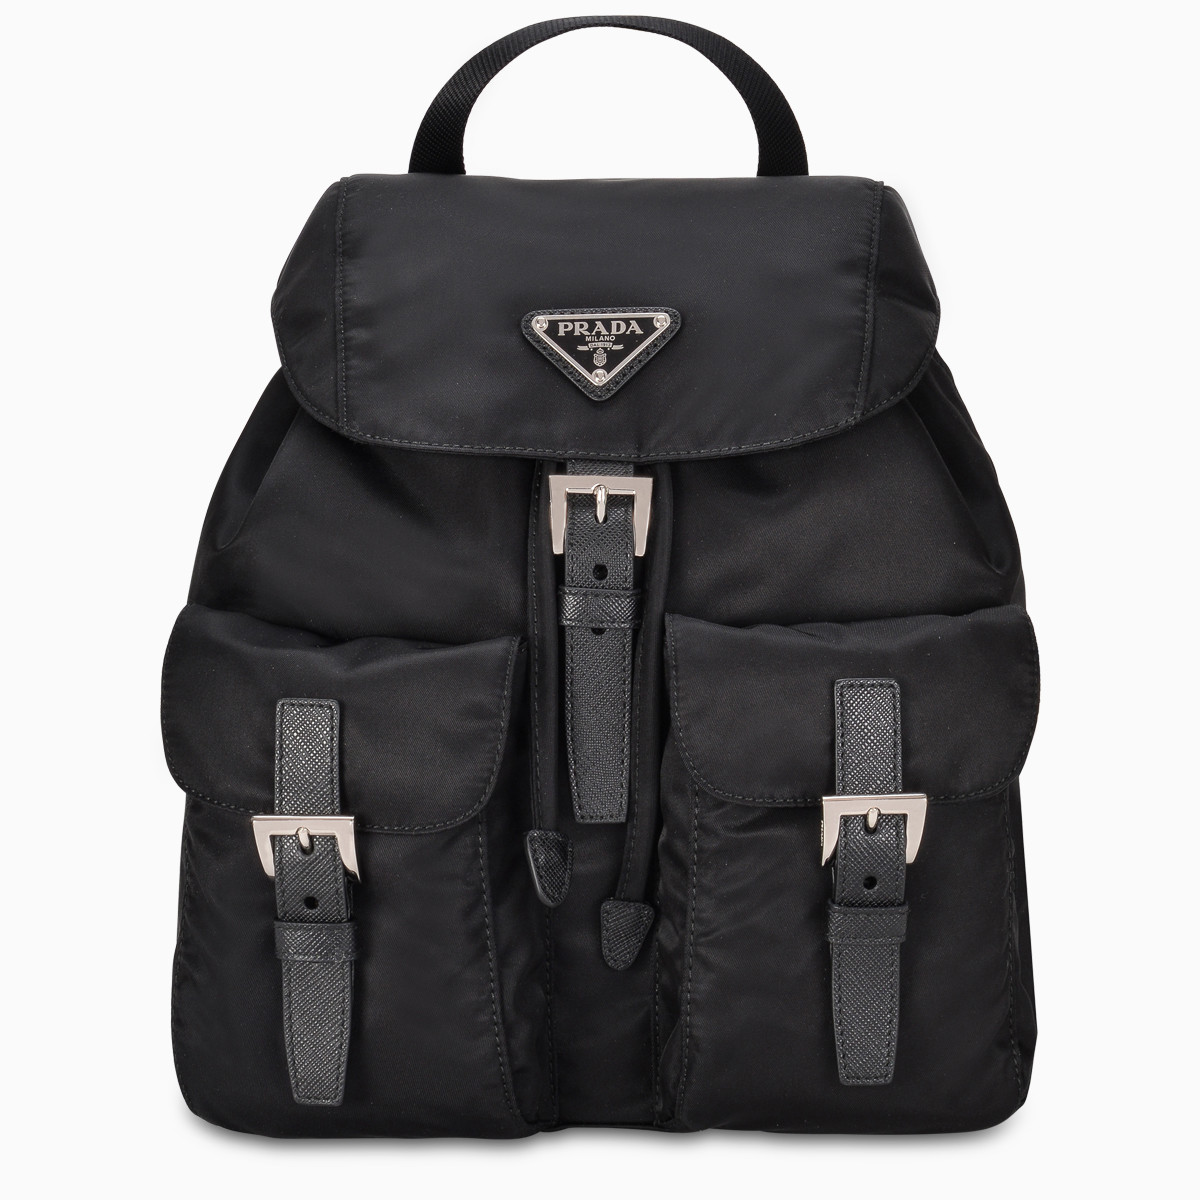 prada backpack purses